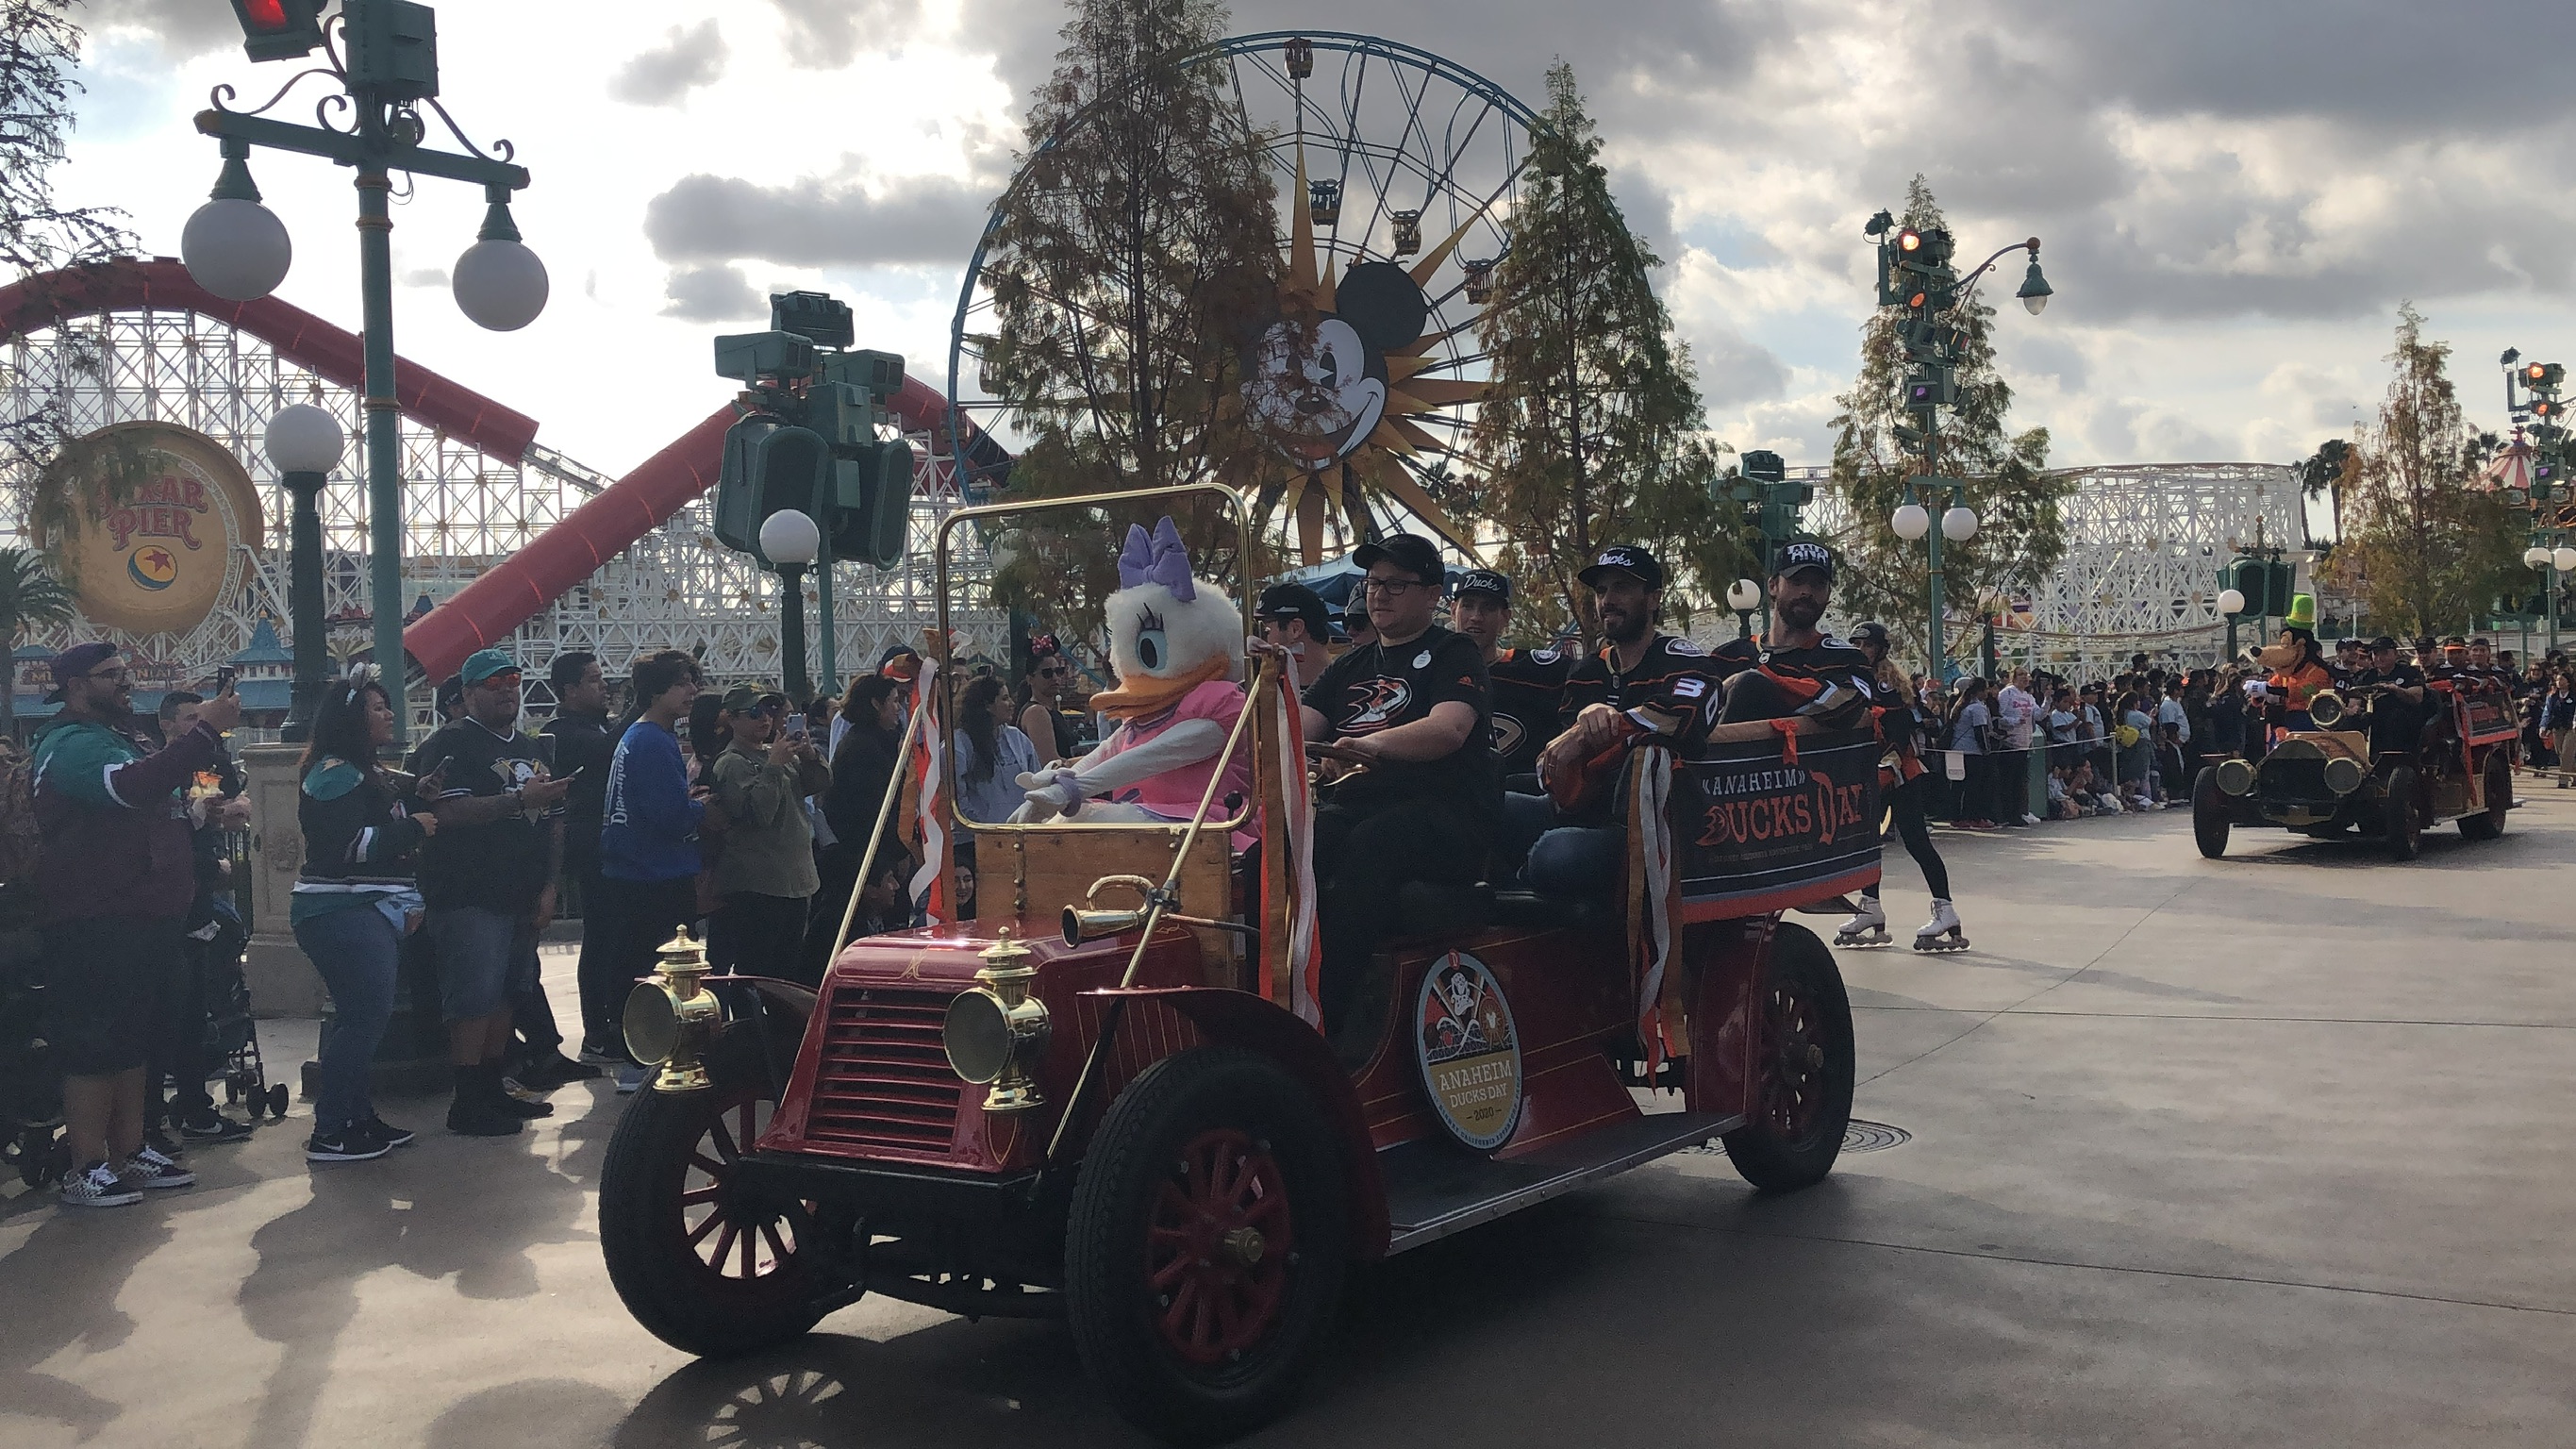 Anaheim Ducks Day Returns to Disneyland in 2020 With Exclusive